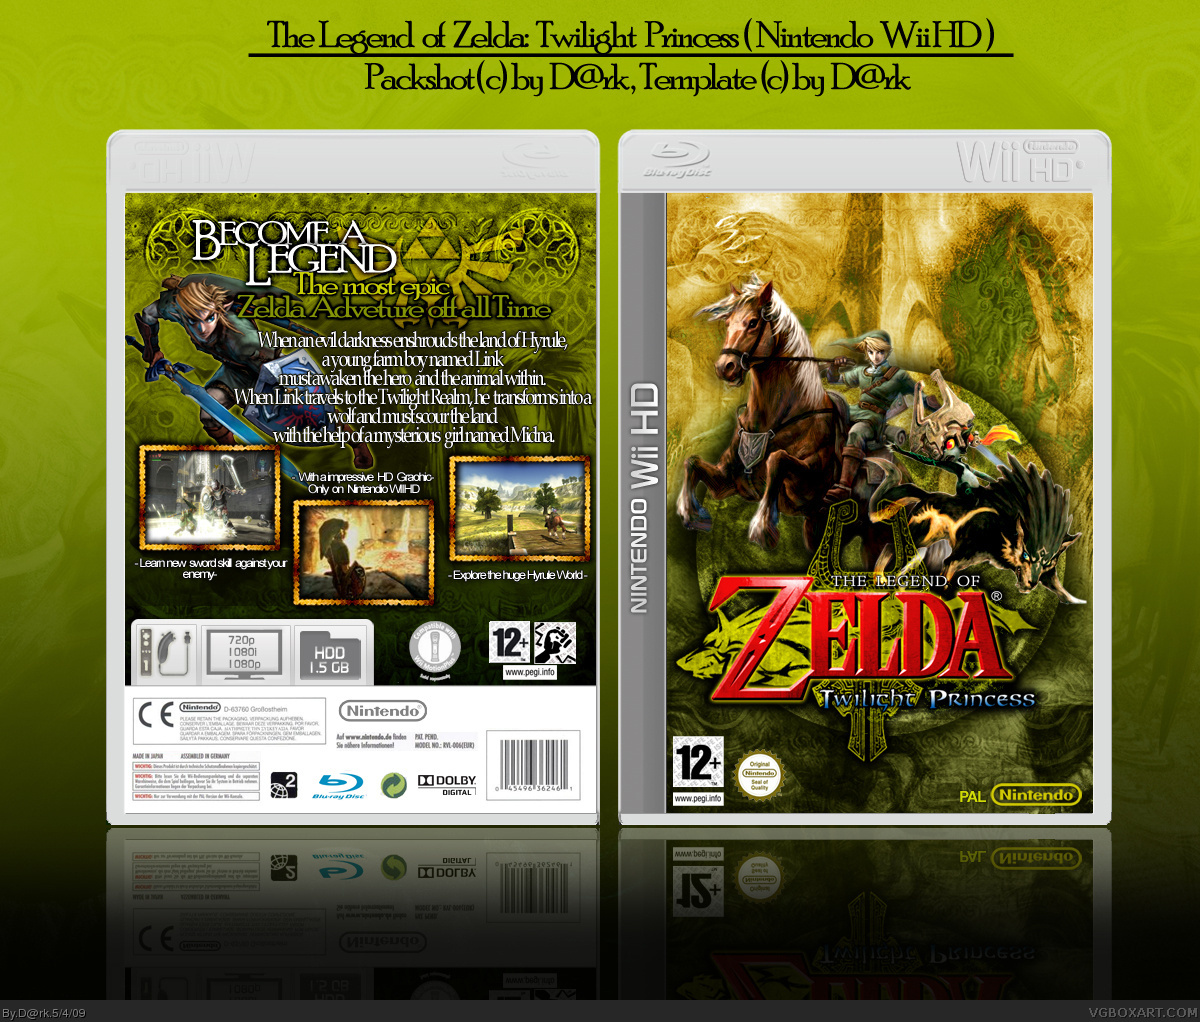 The Legend of Zelda: Twilight Princess (WiiHD) box cover